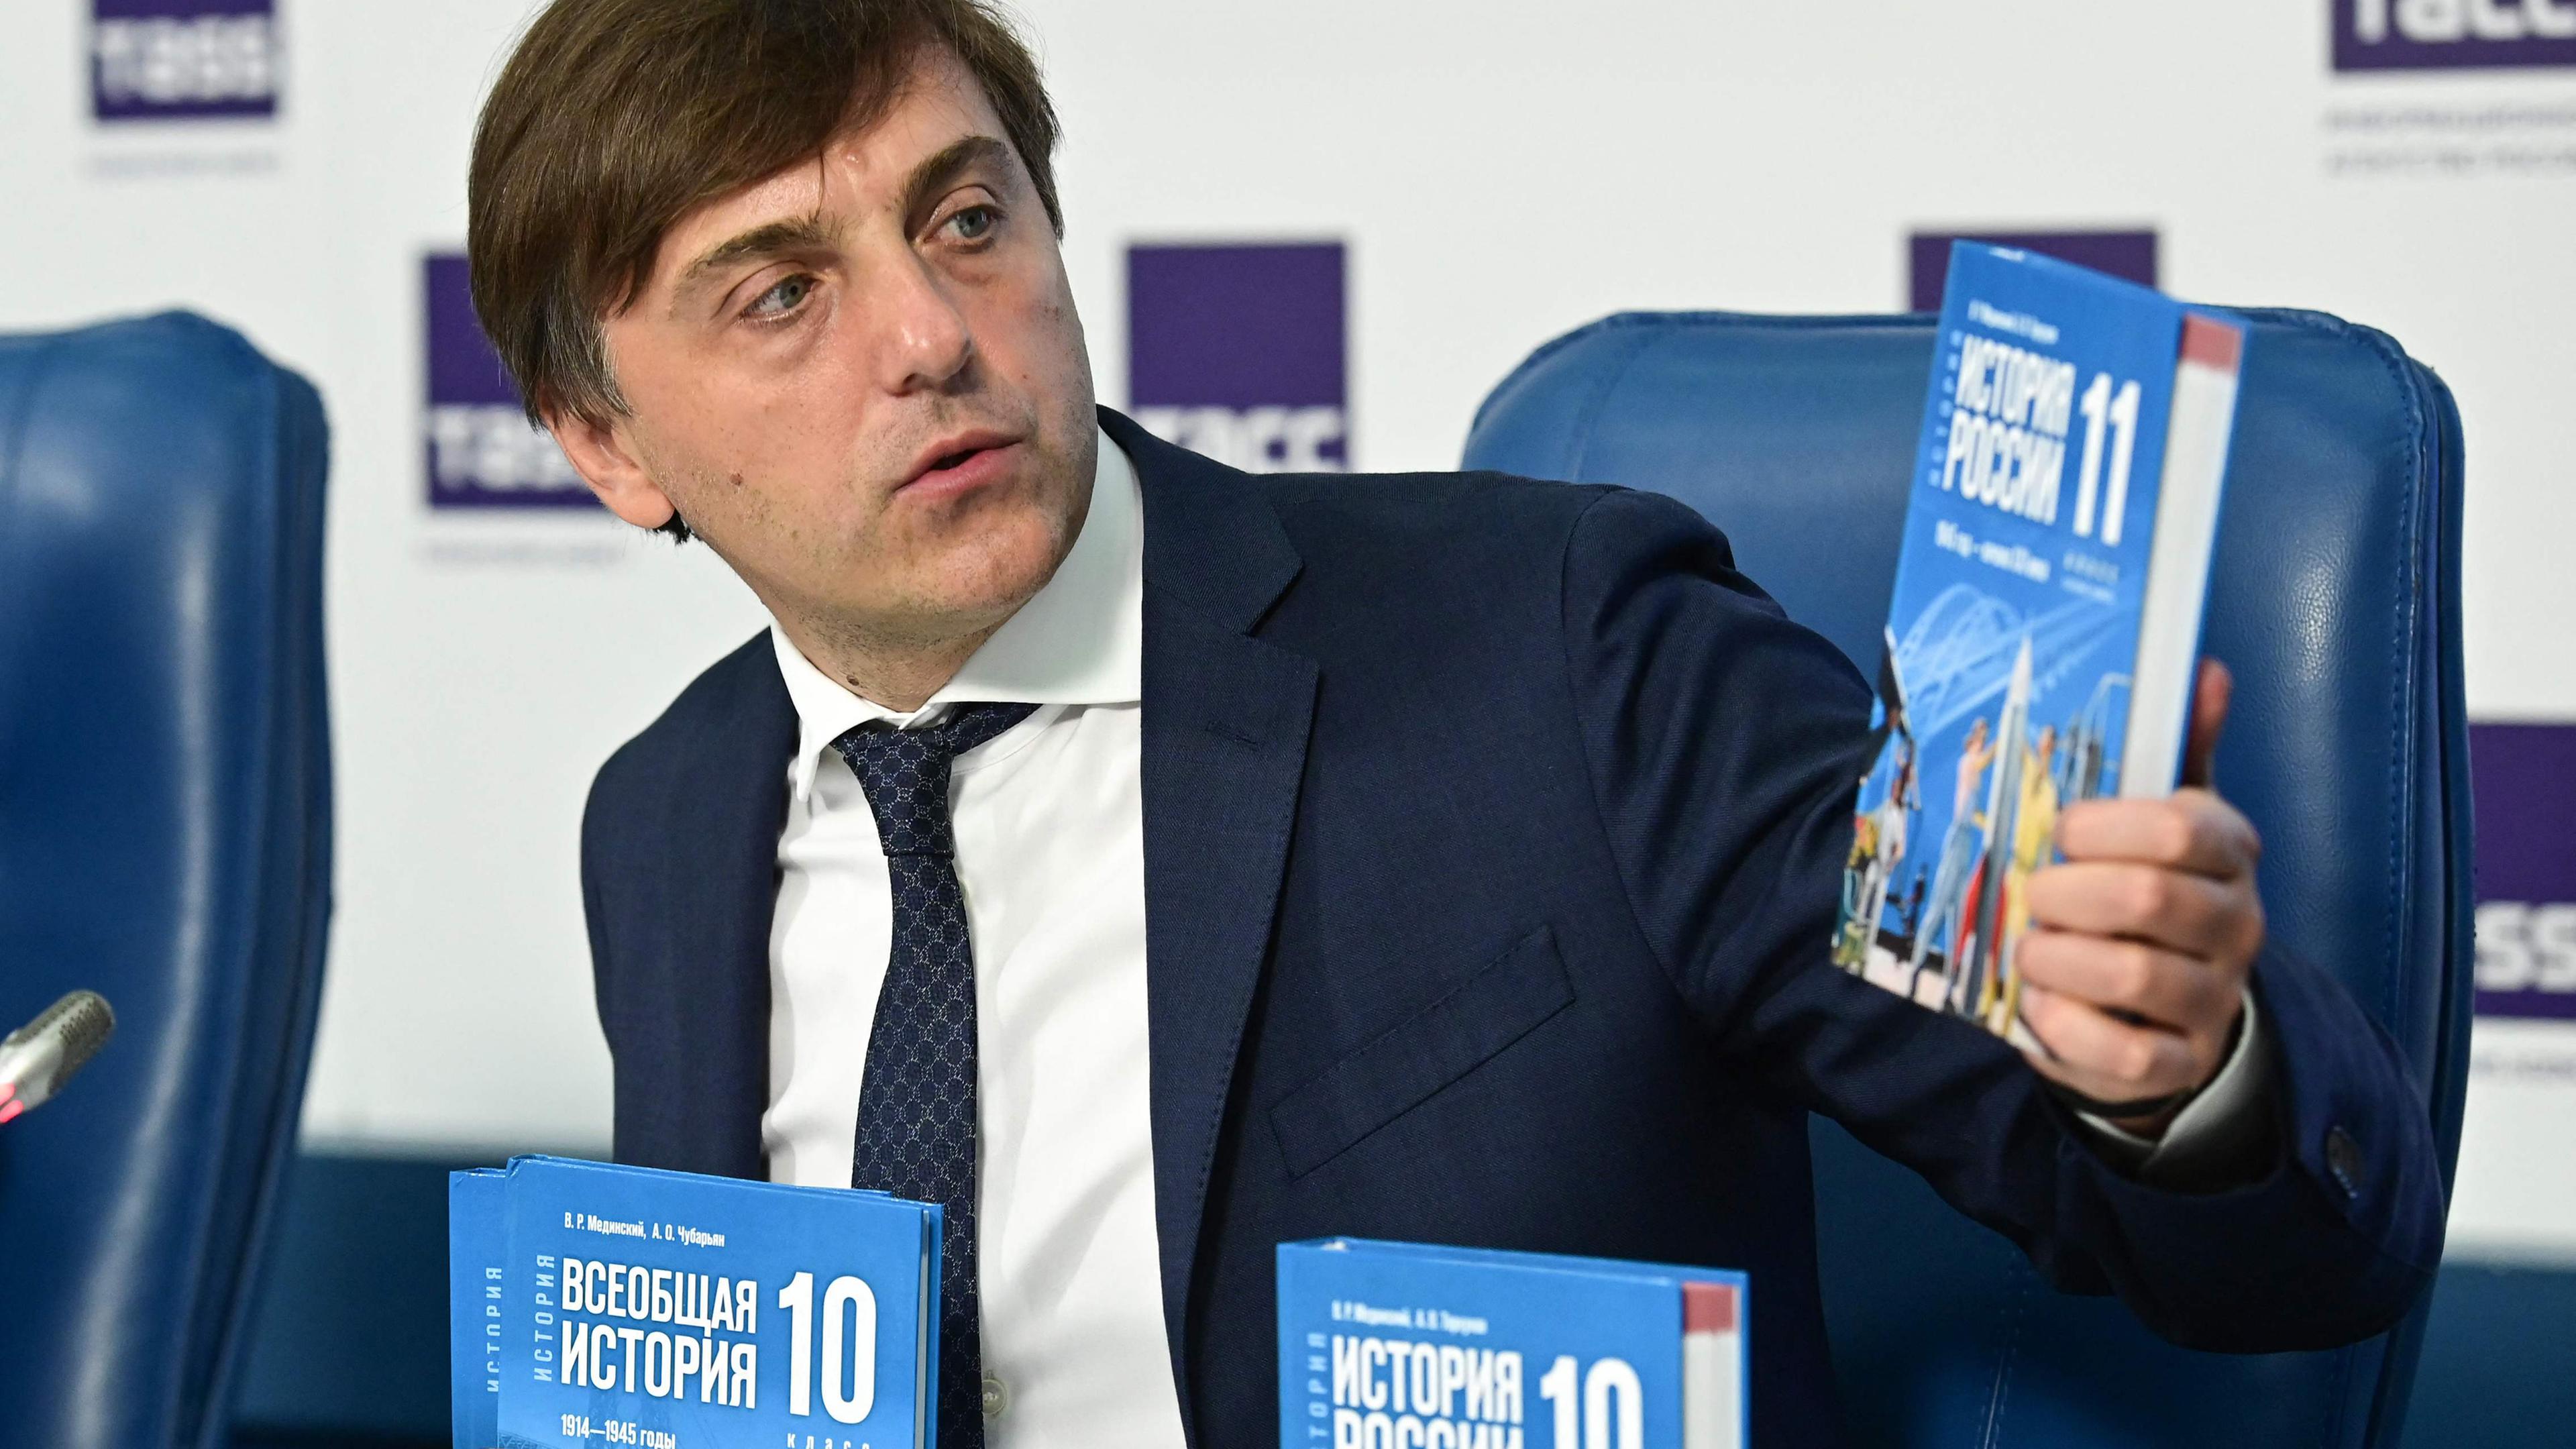 Russischer Bildungsminister Sergej Krawtsow präsentiert neues Geschichtsbuch für Schüler.